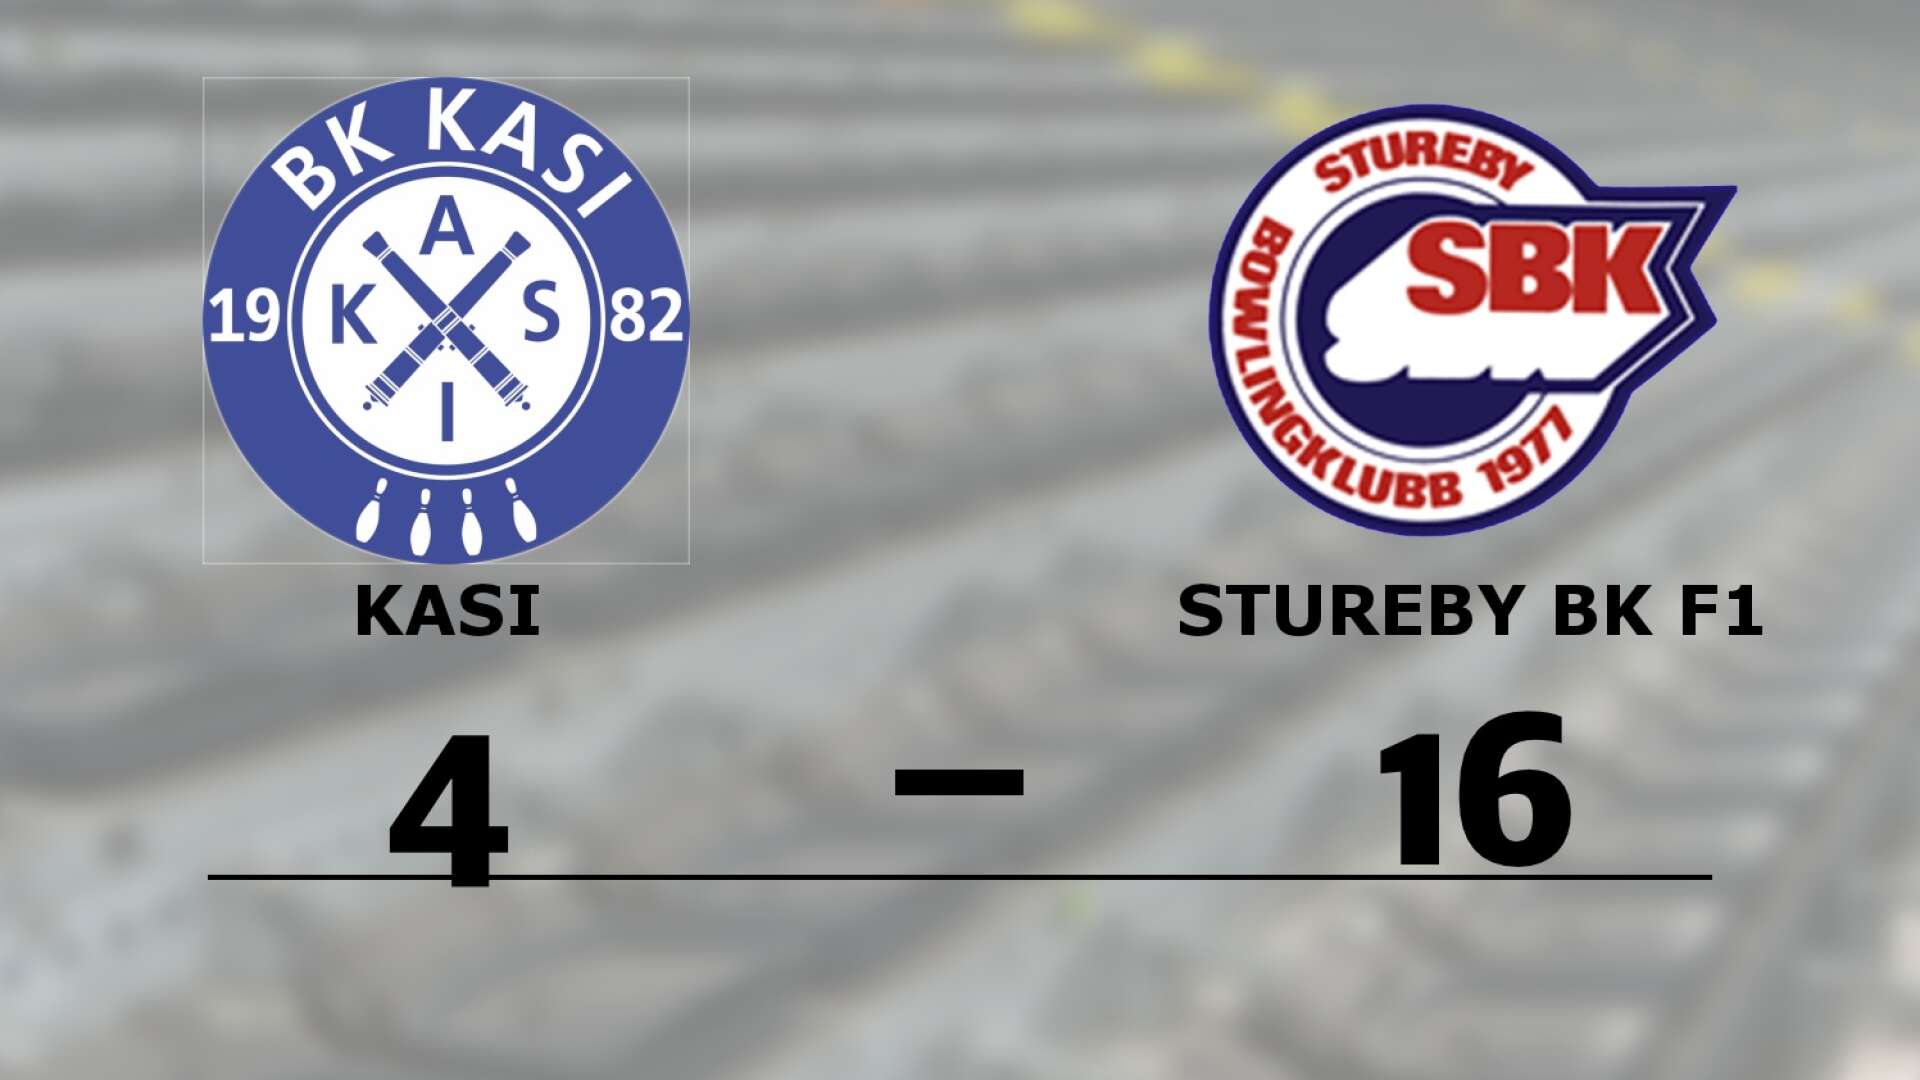 BK Kasi förlorade mot BK Stureby